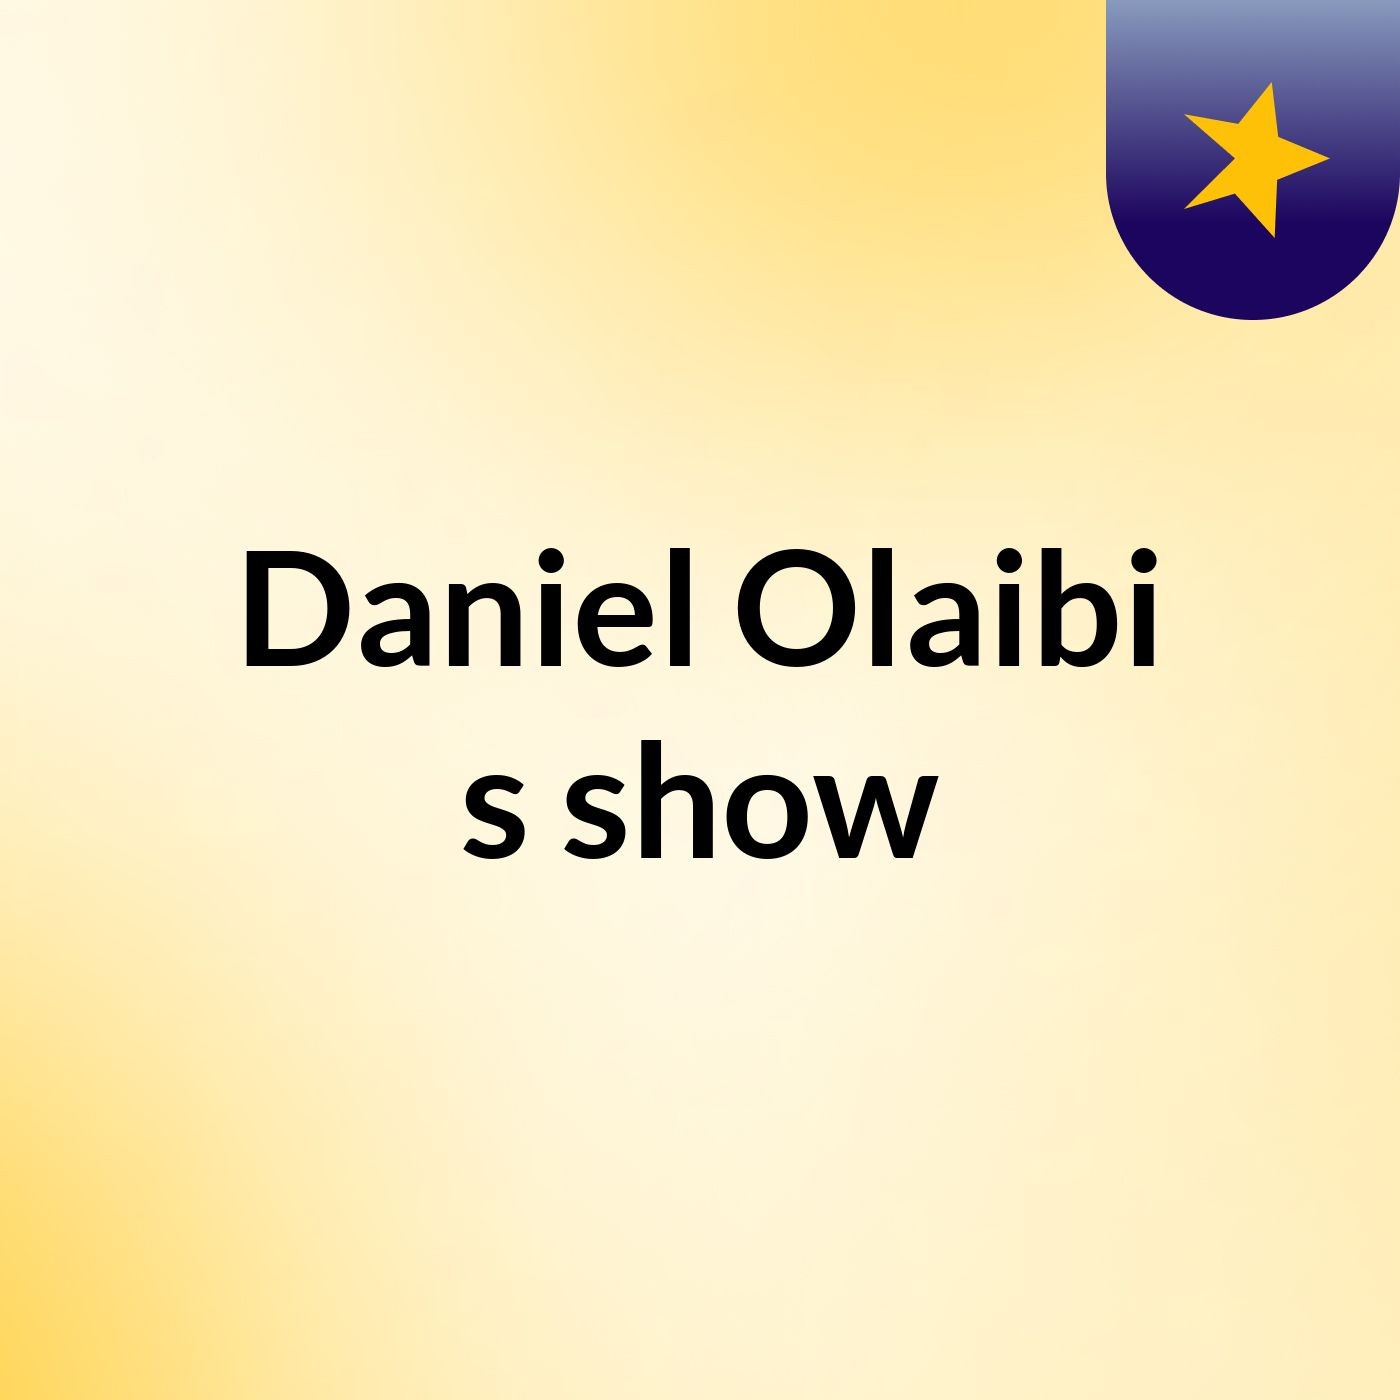 Daniel Olaibi's show